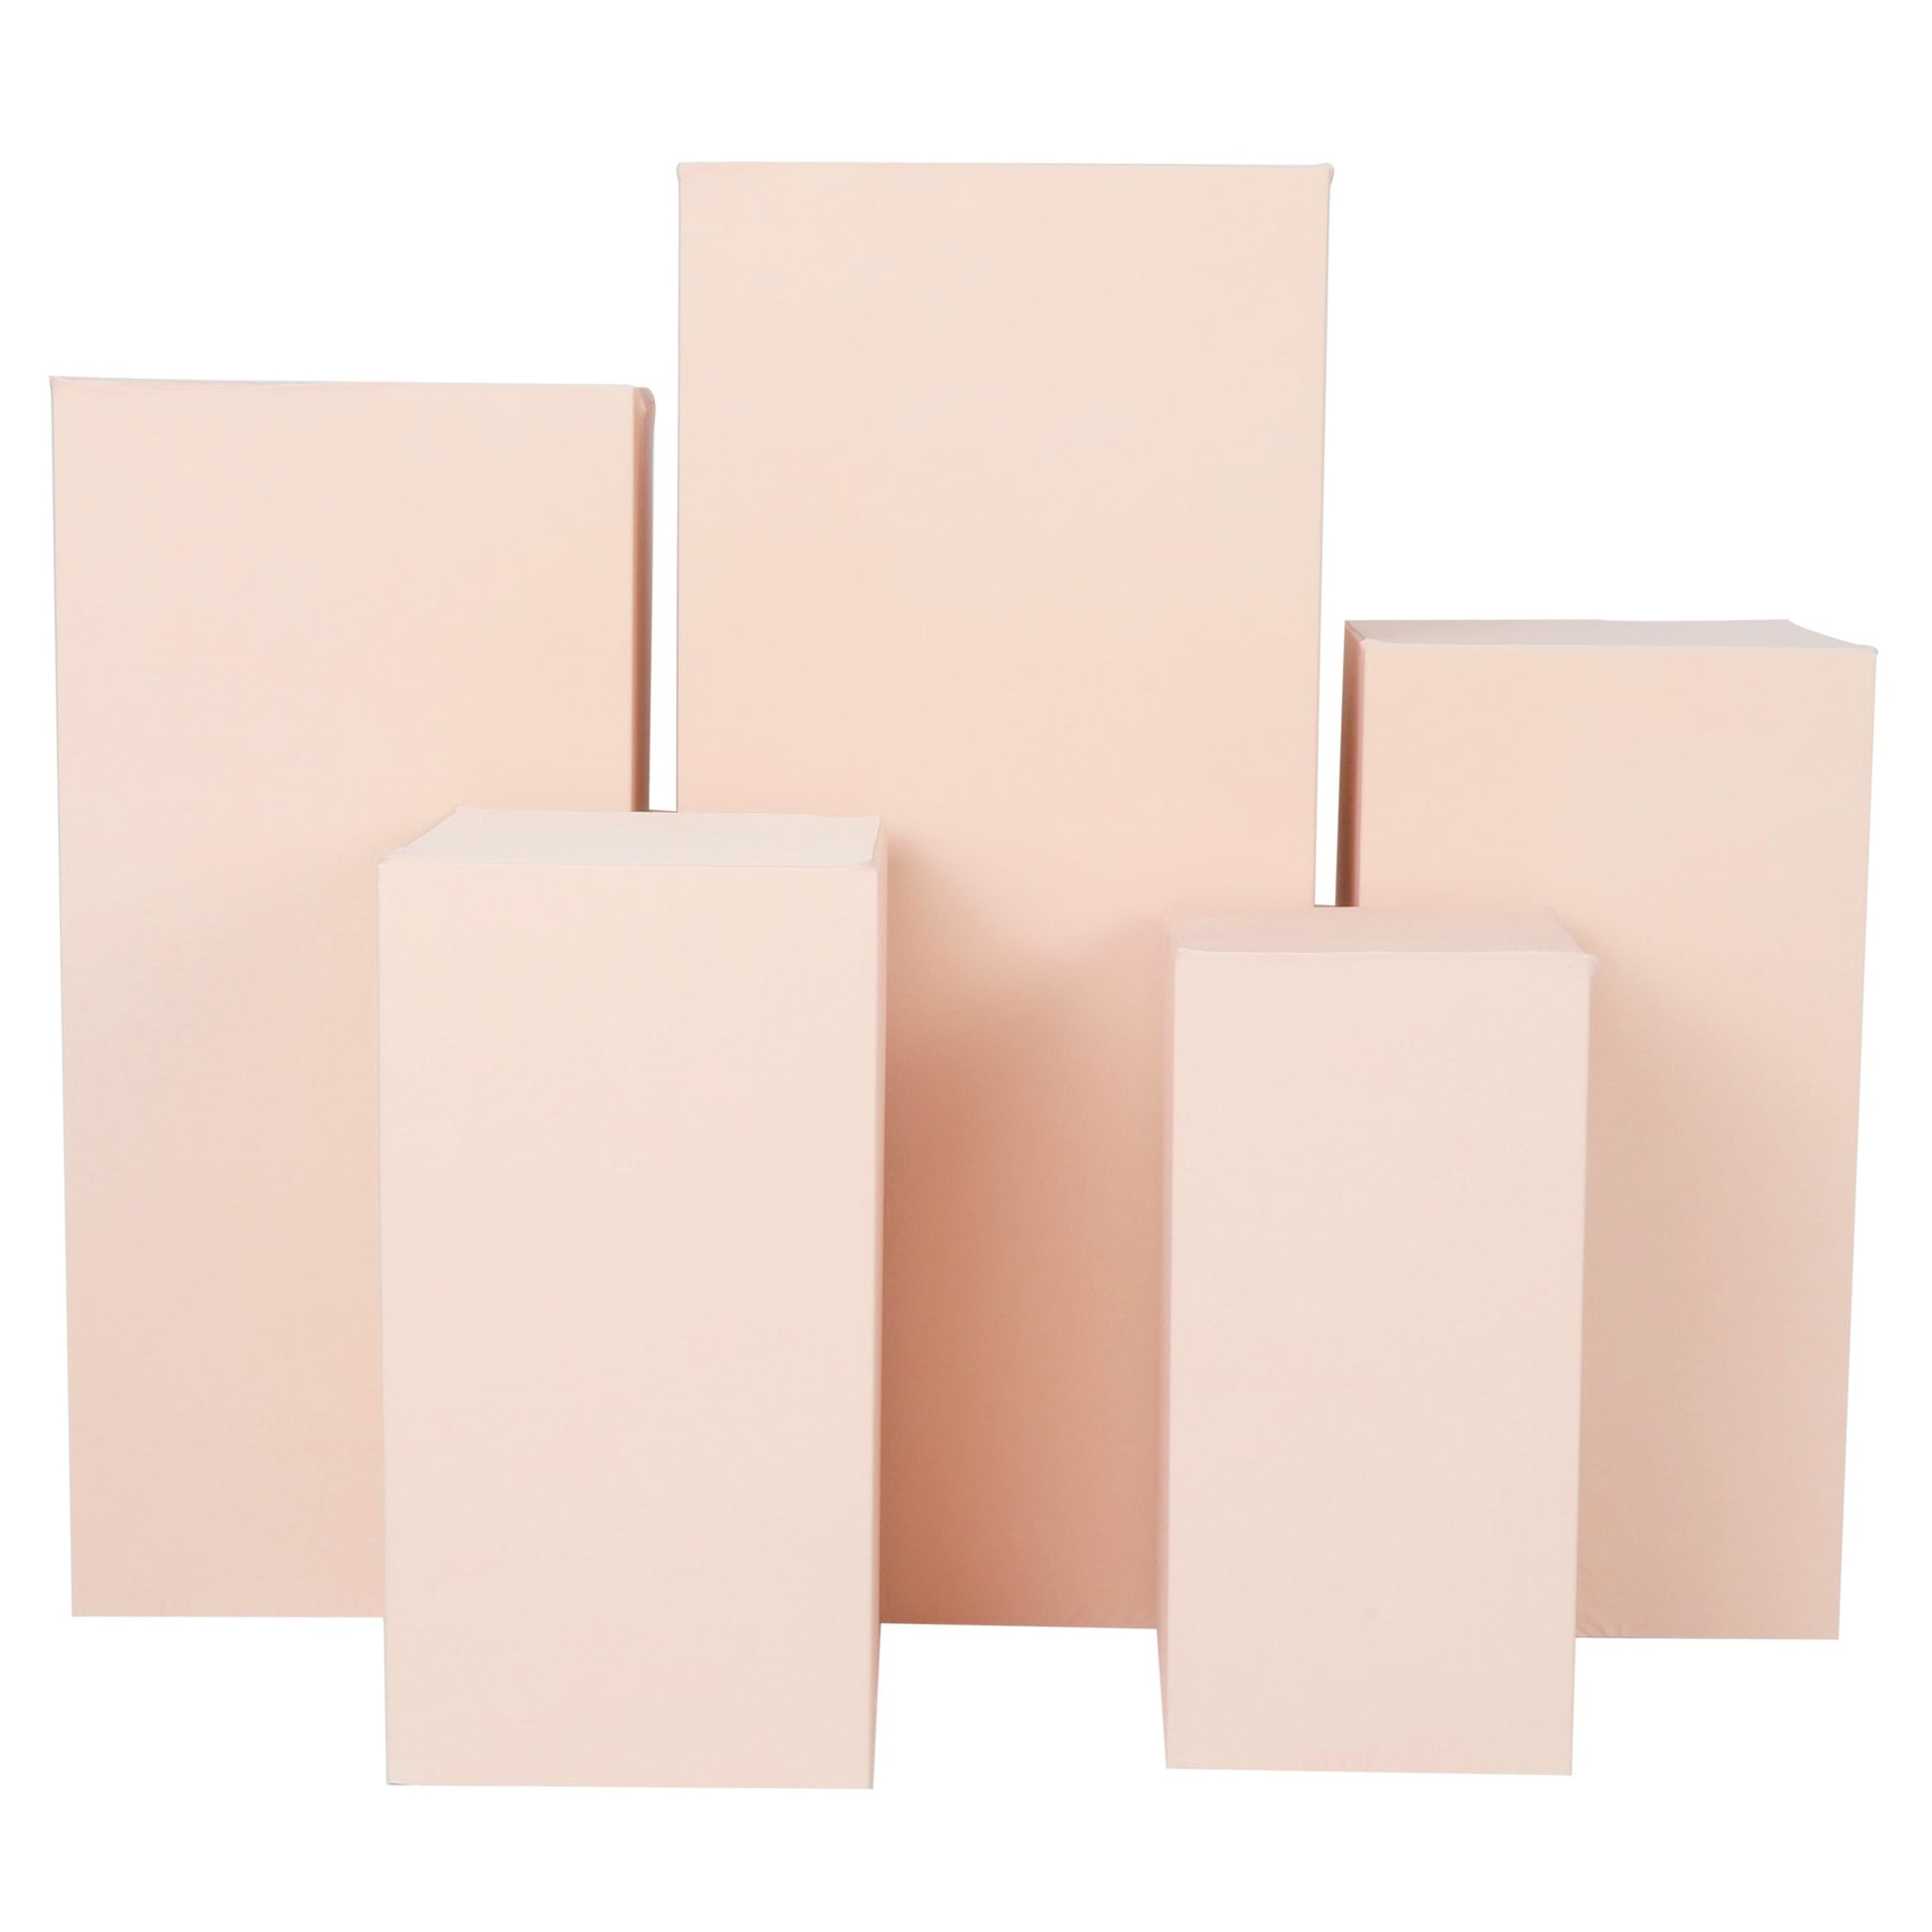 Spandex Covers for Square Metal Pillar Pedestal Stands 5 pcs/set - Blush/Rose Gold